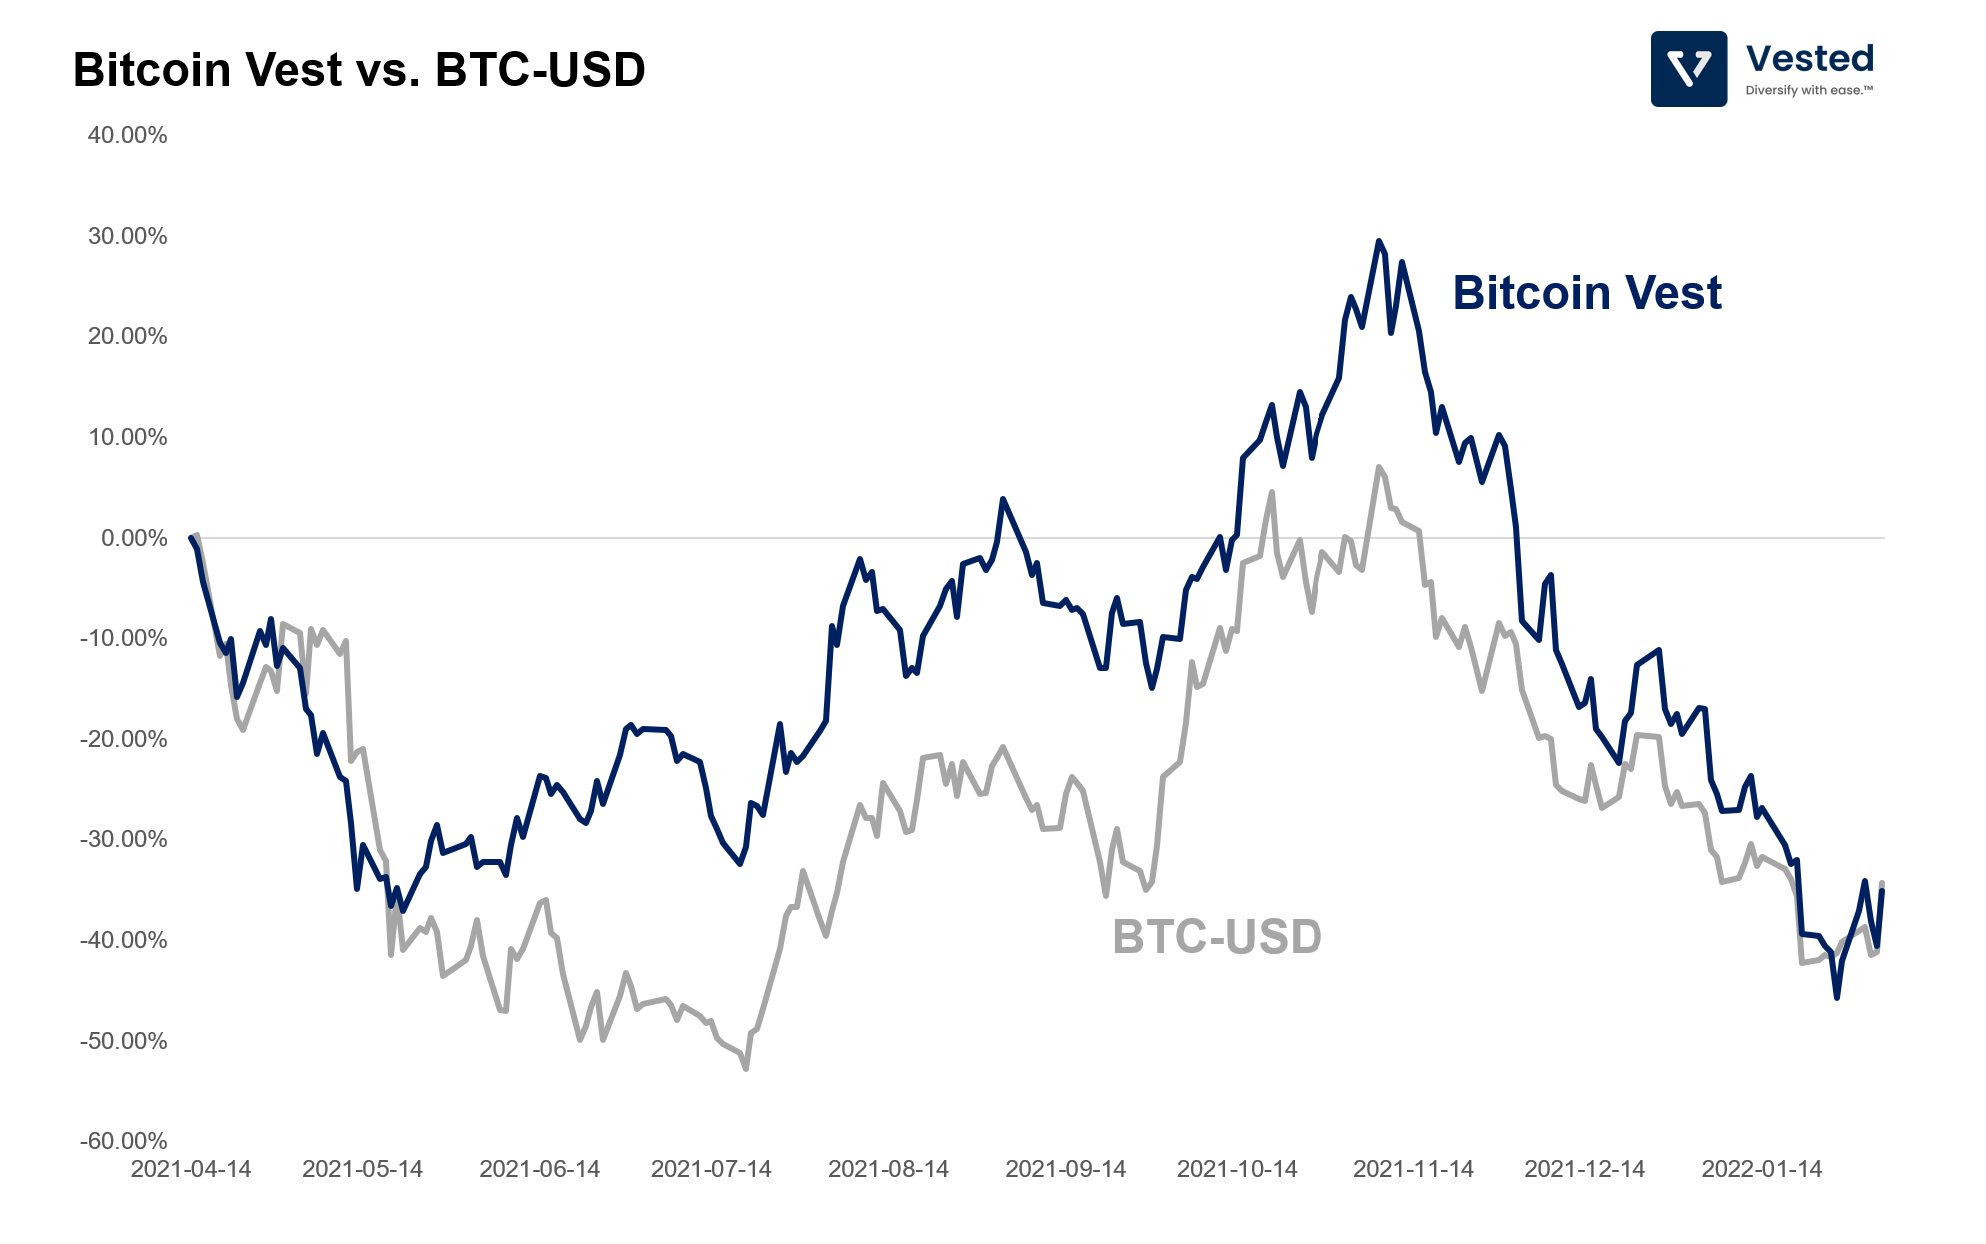 Return profiles of Bitcoin Vest vs. BTC-USD. Past performance does not guarantee future returns